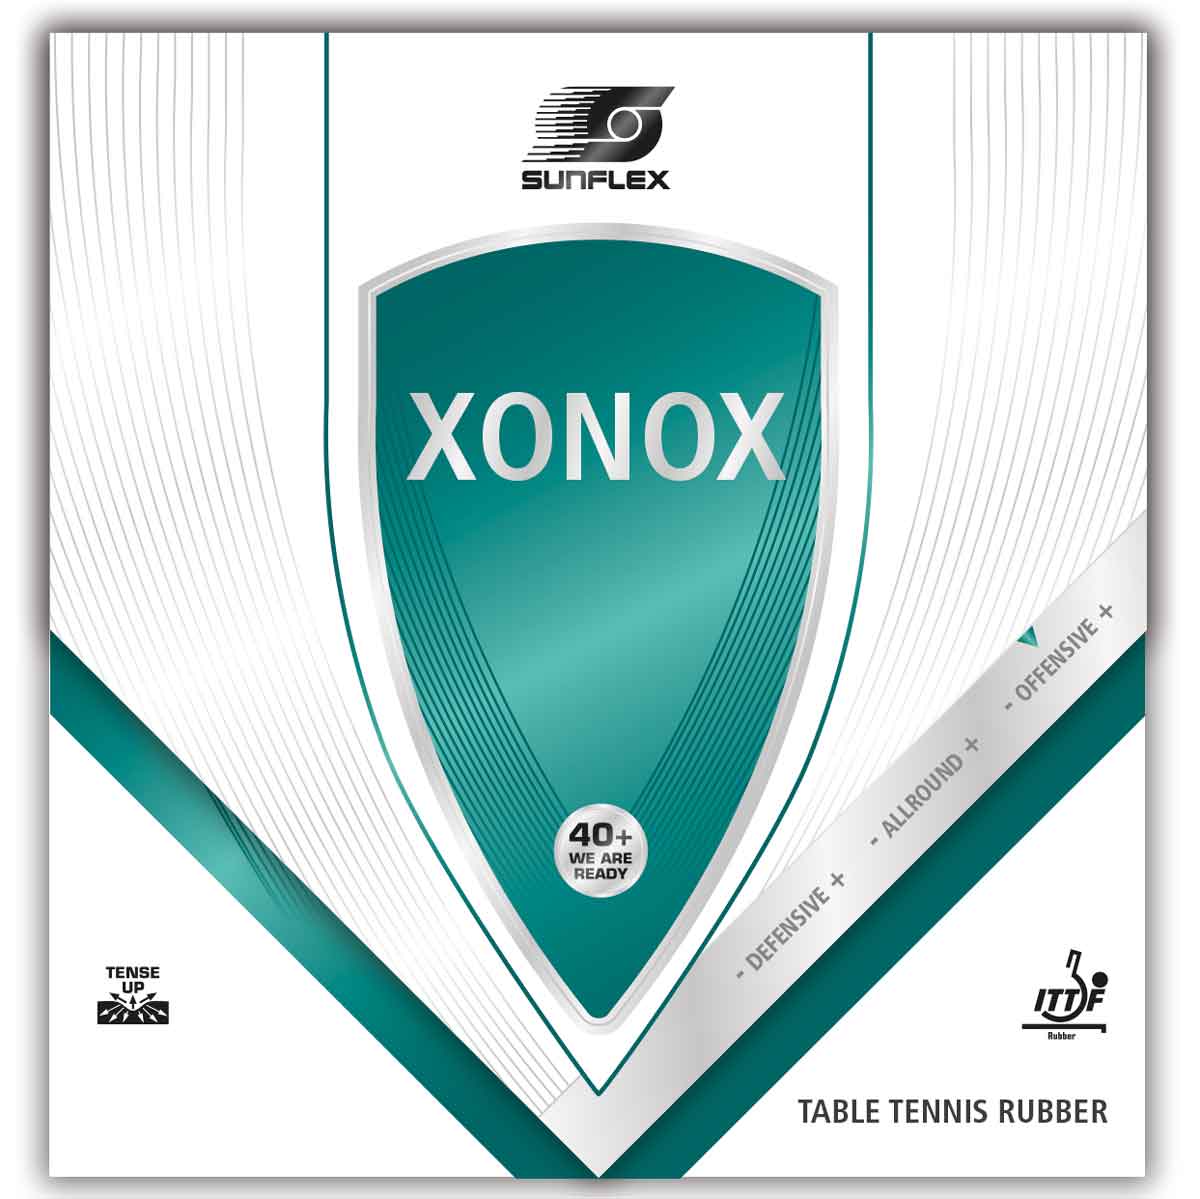 sunflex Rubber Xonox